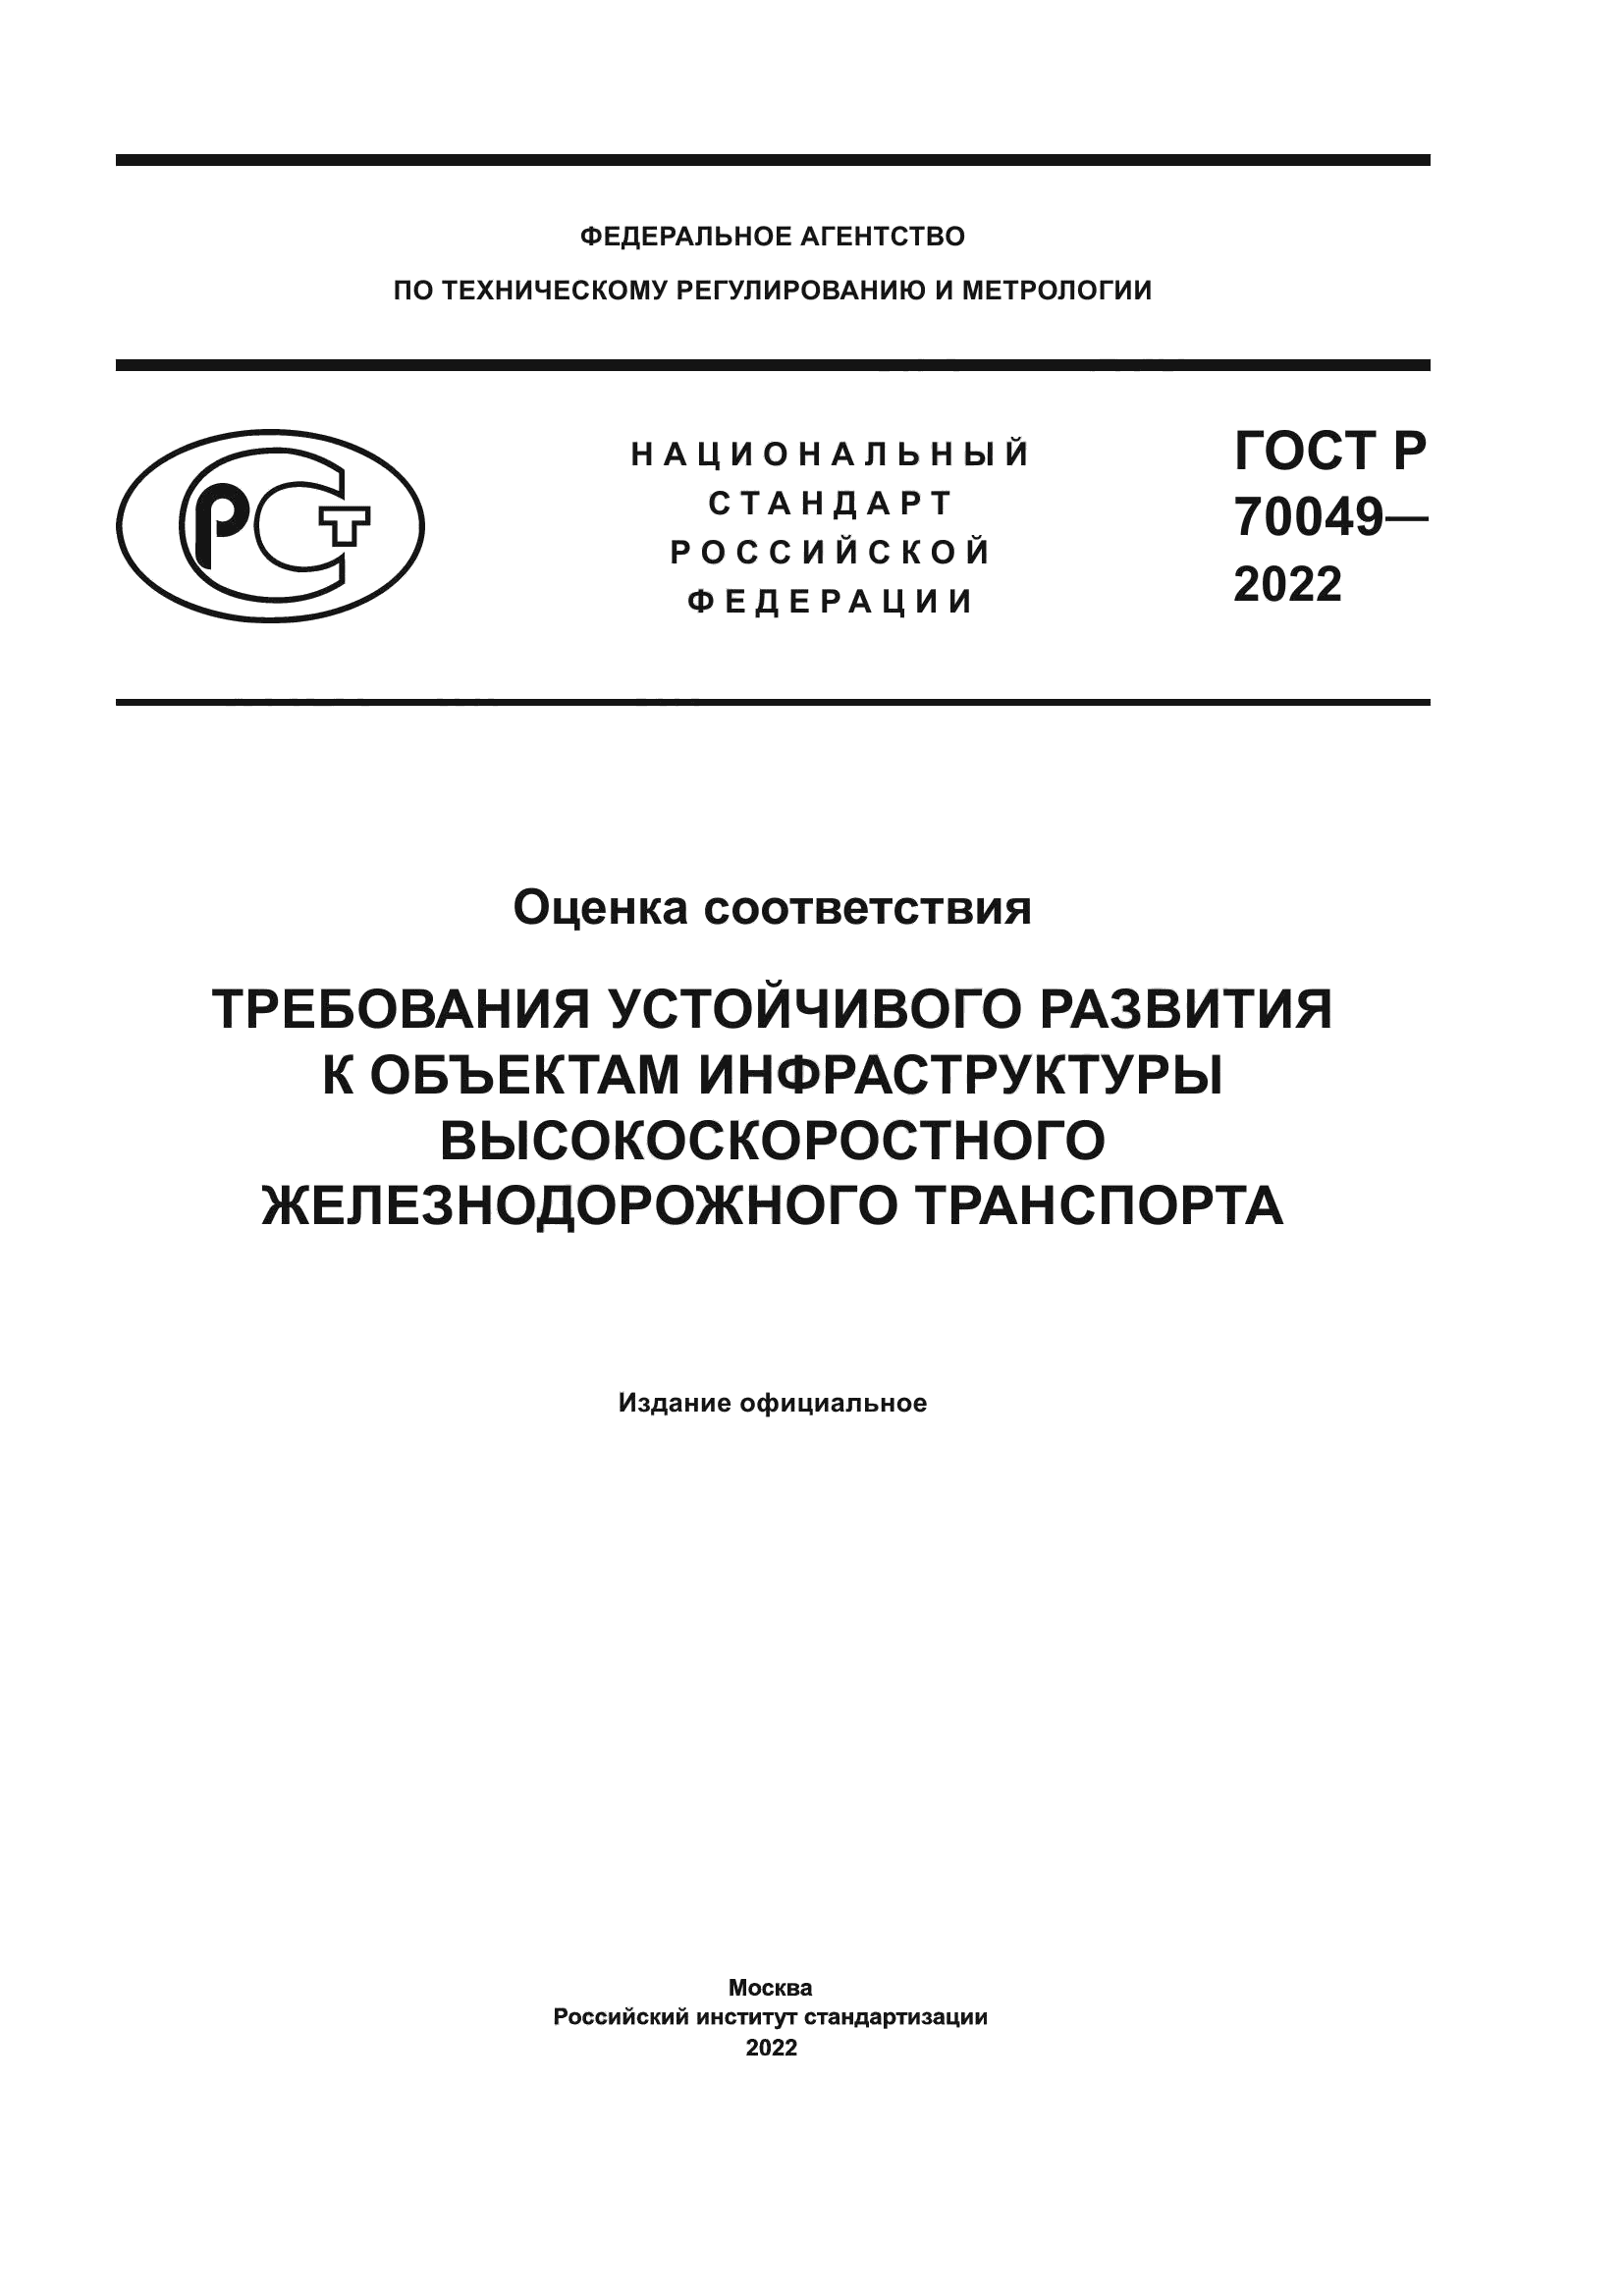 ГОСТ Р 70049-2022